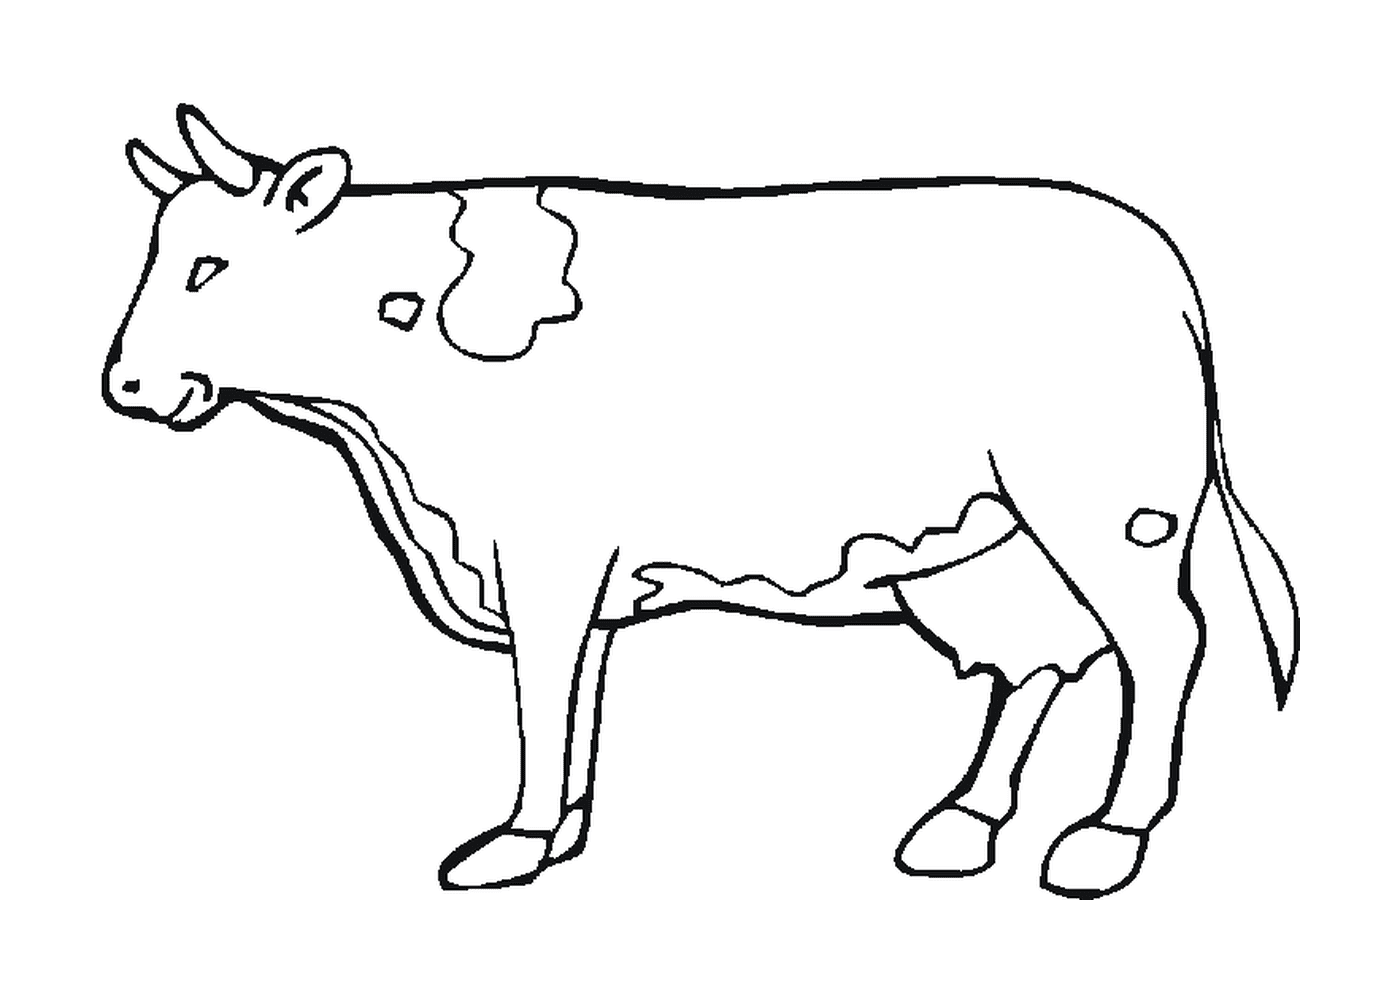  A cow 